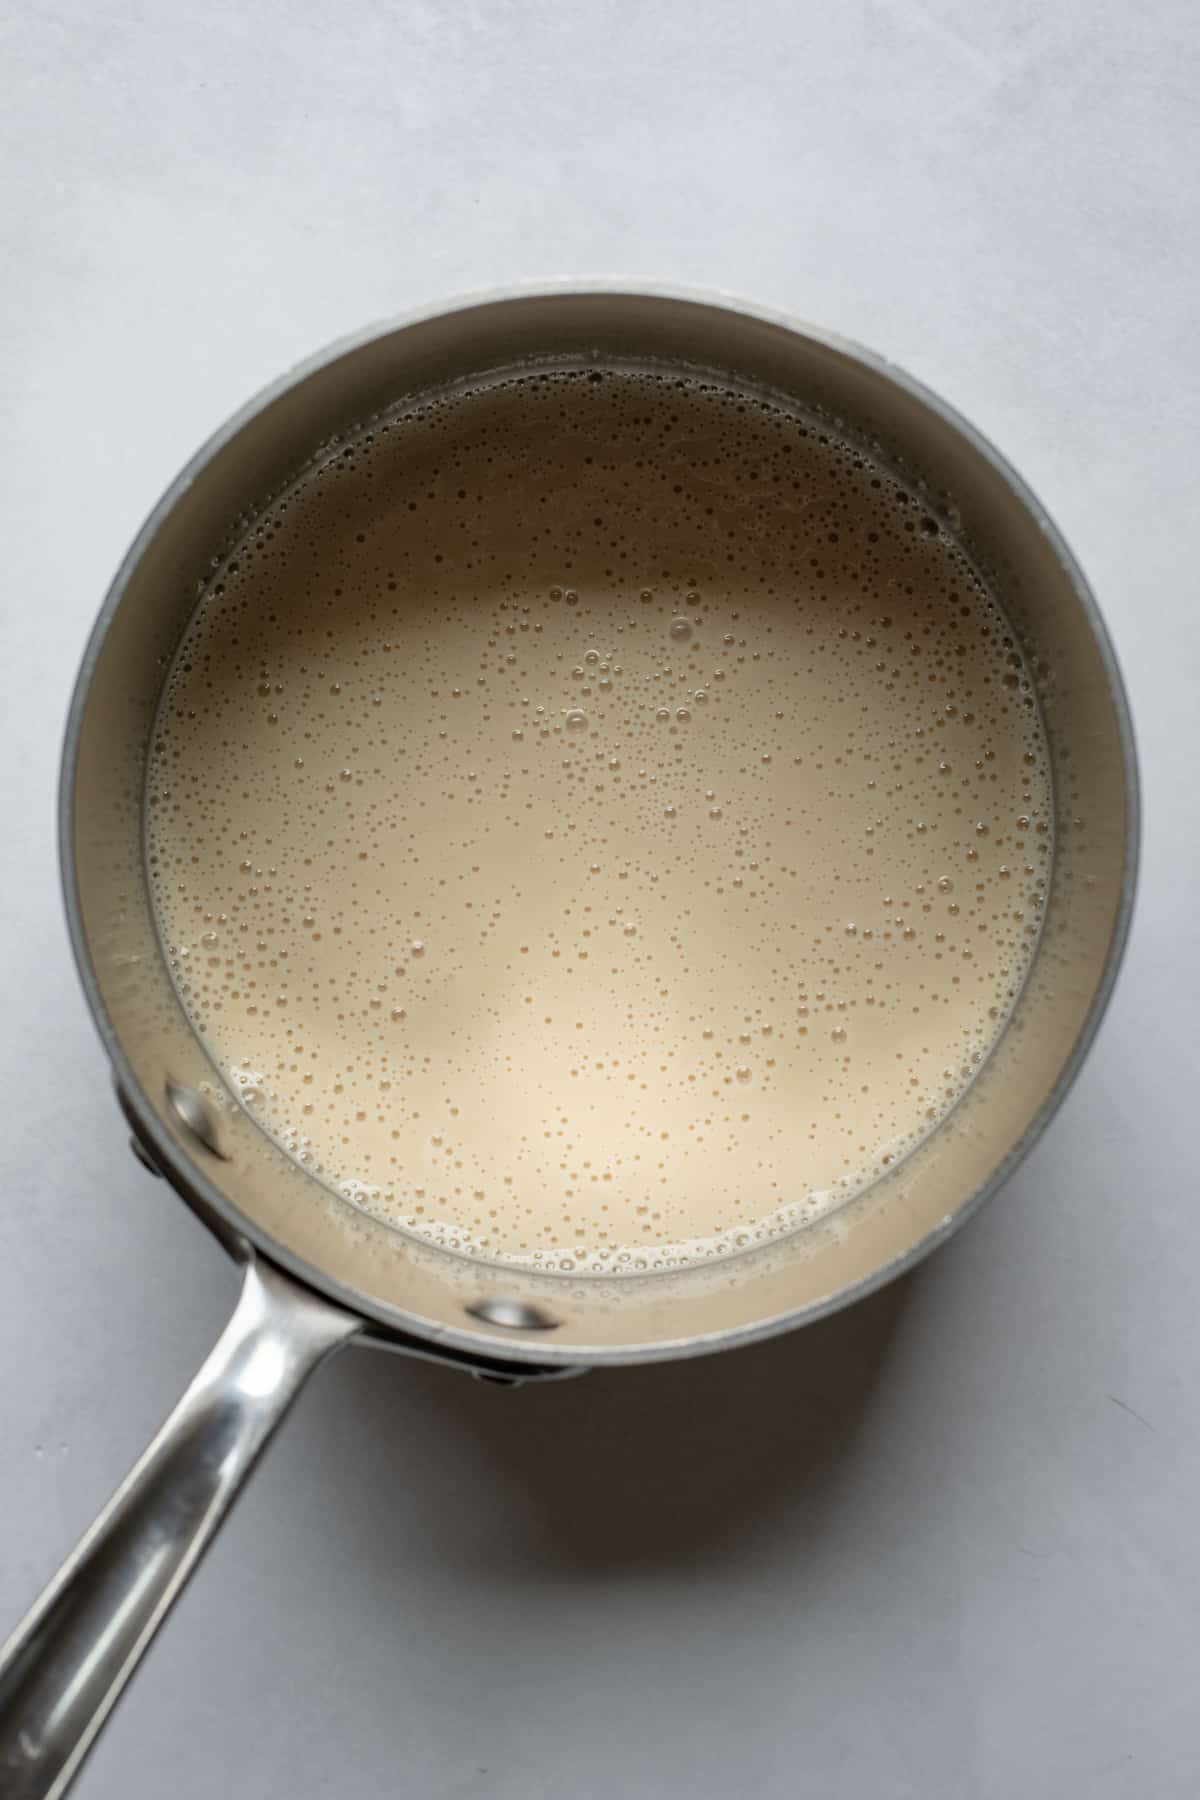 milk mixture inside small sauce pan prior to heating.